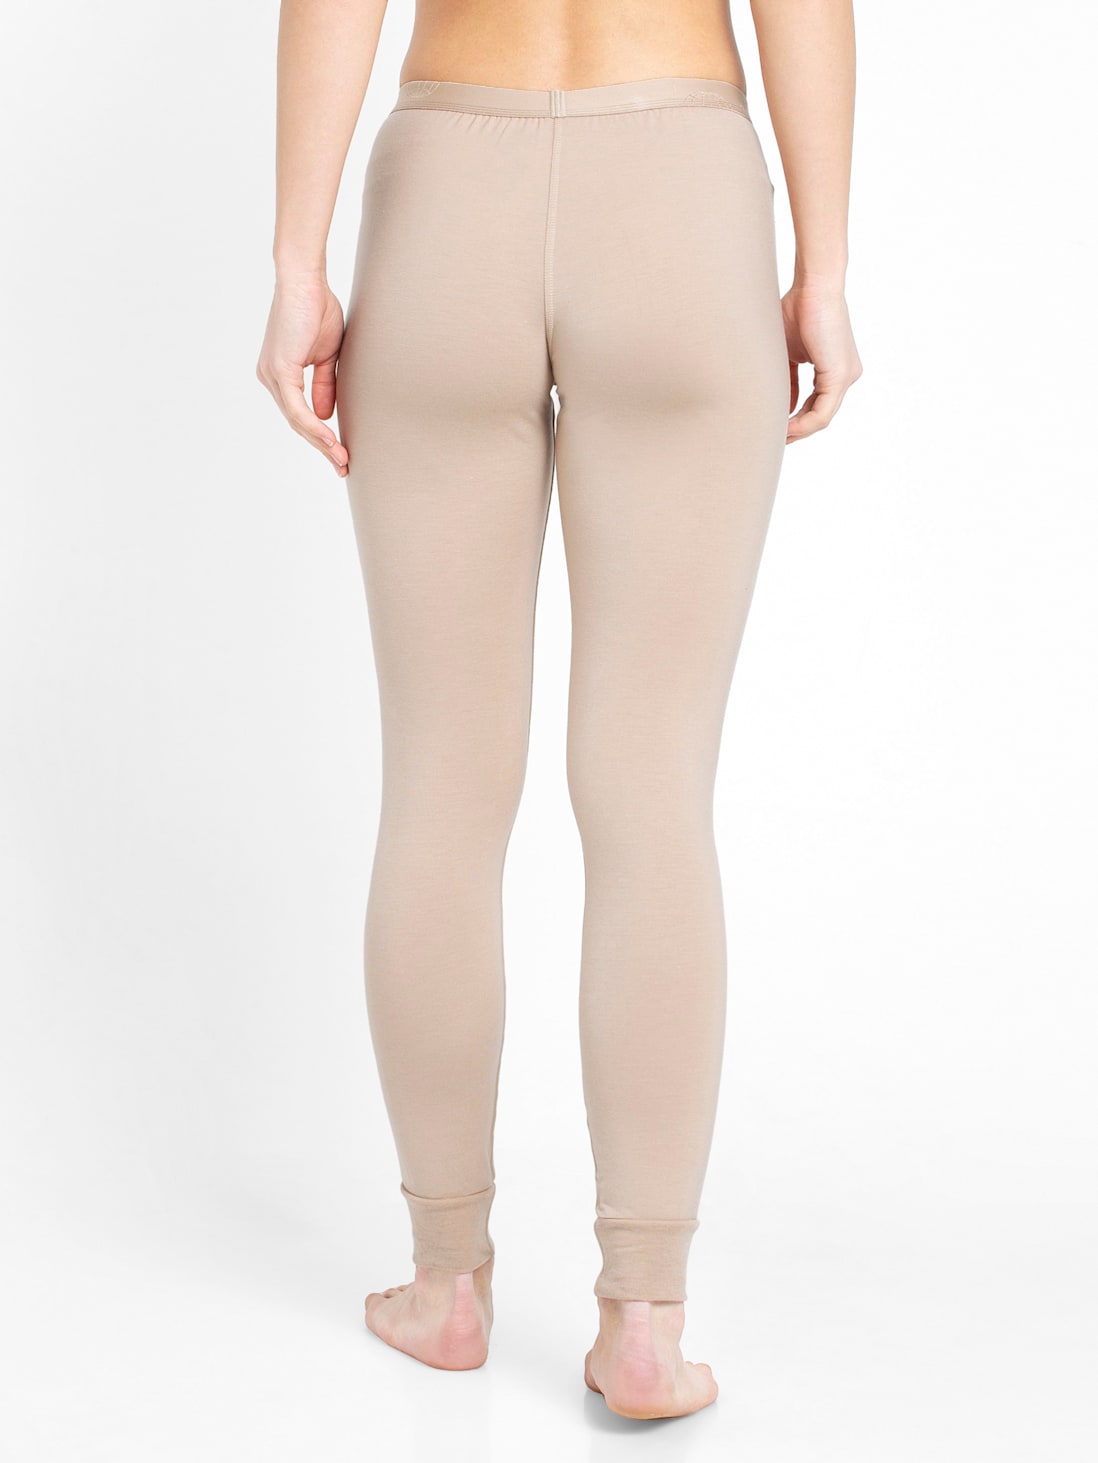 FOG cream thermal leggings - Athletic apparel